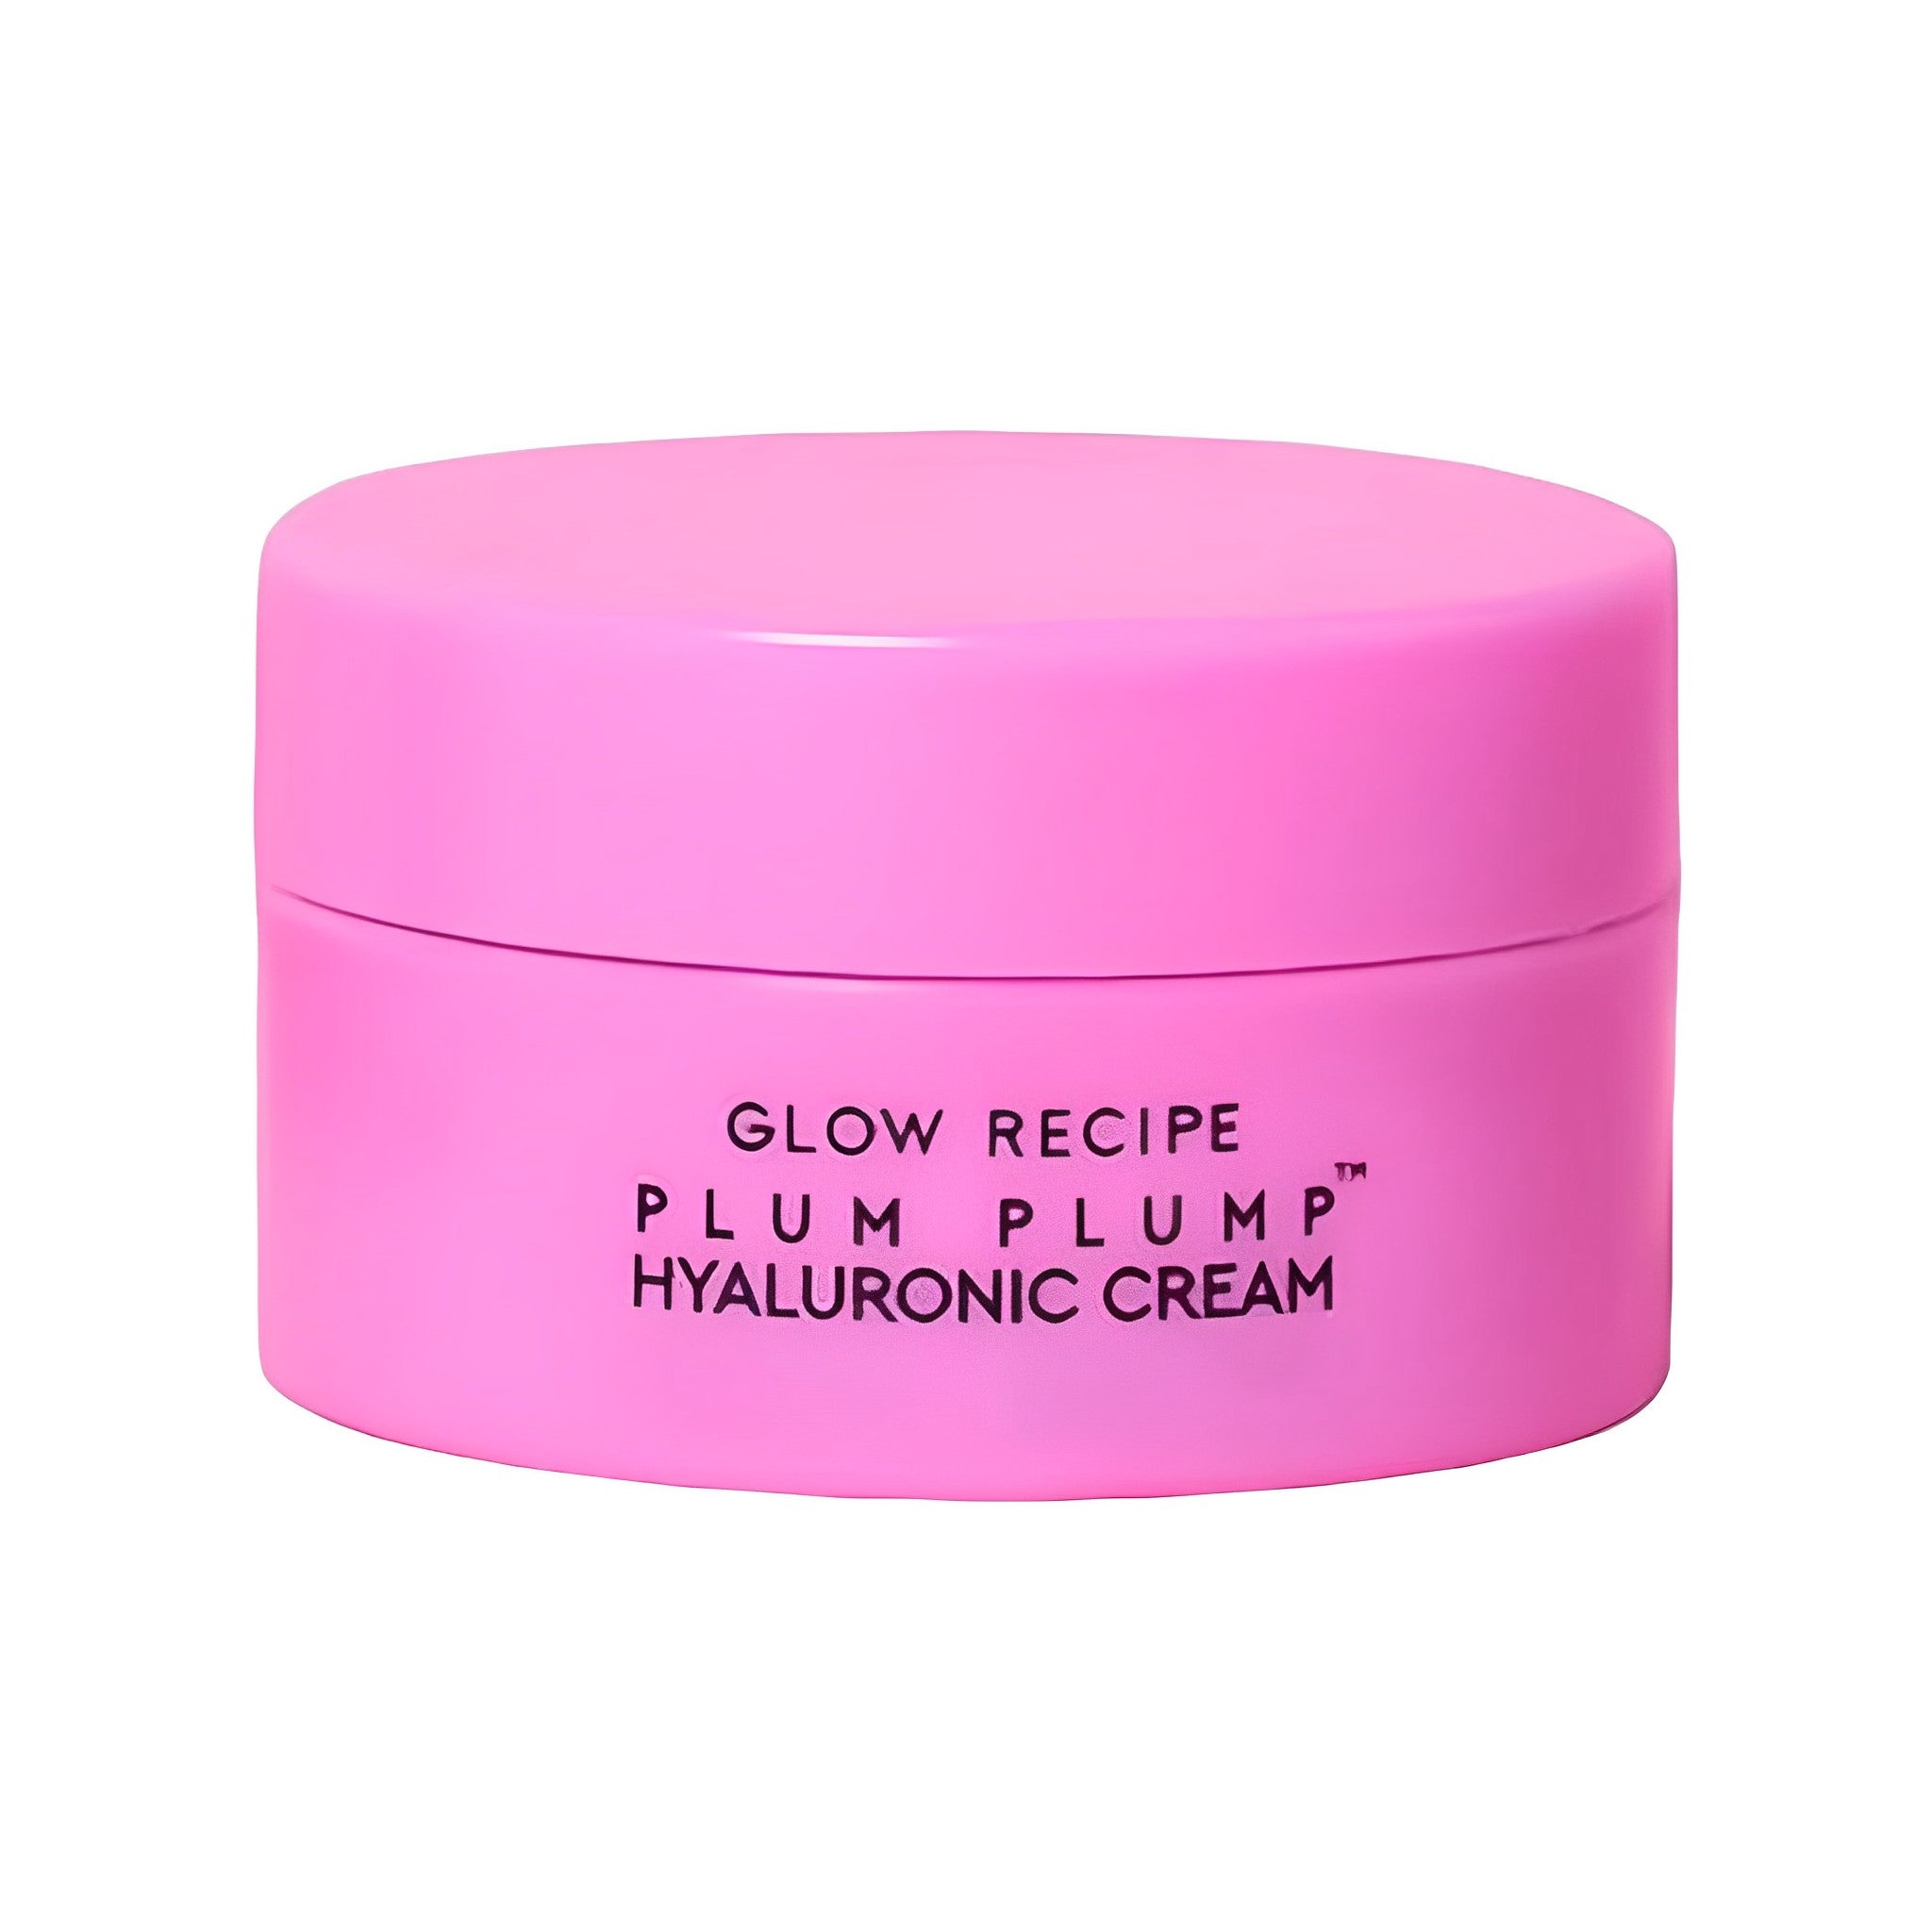 Plum Plump Hyaluronic Cream-Glow Recipe